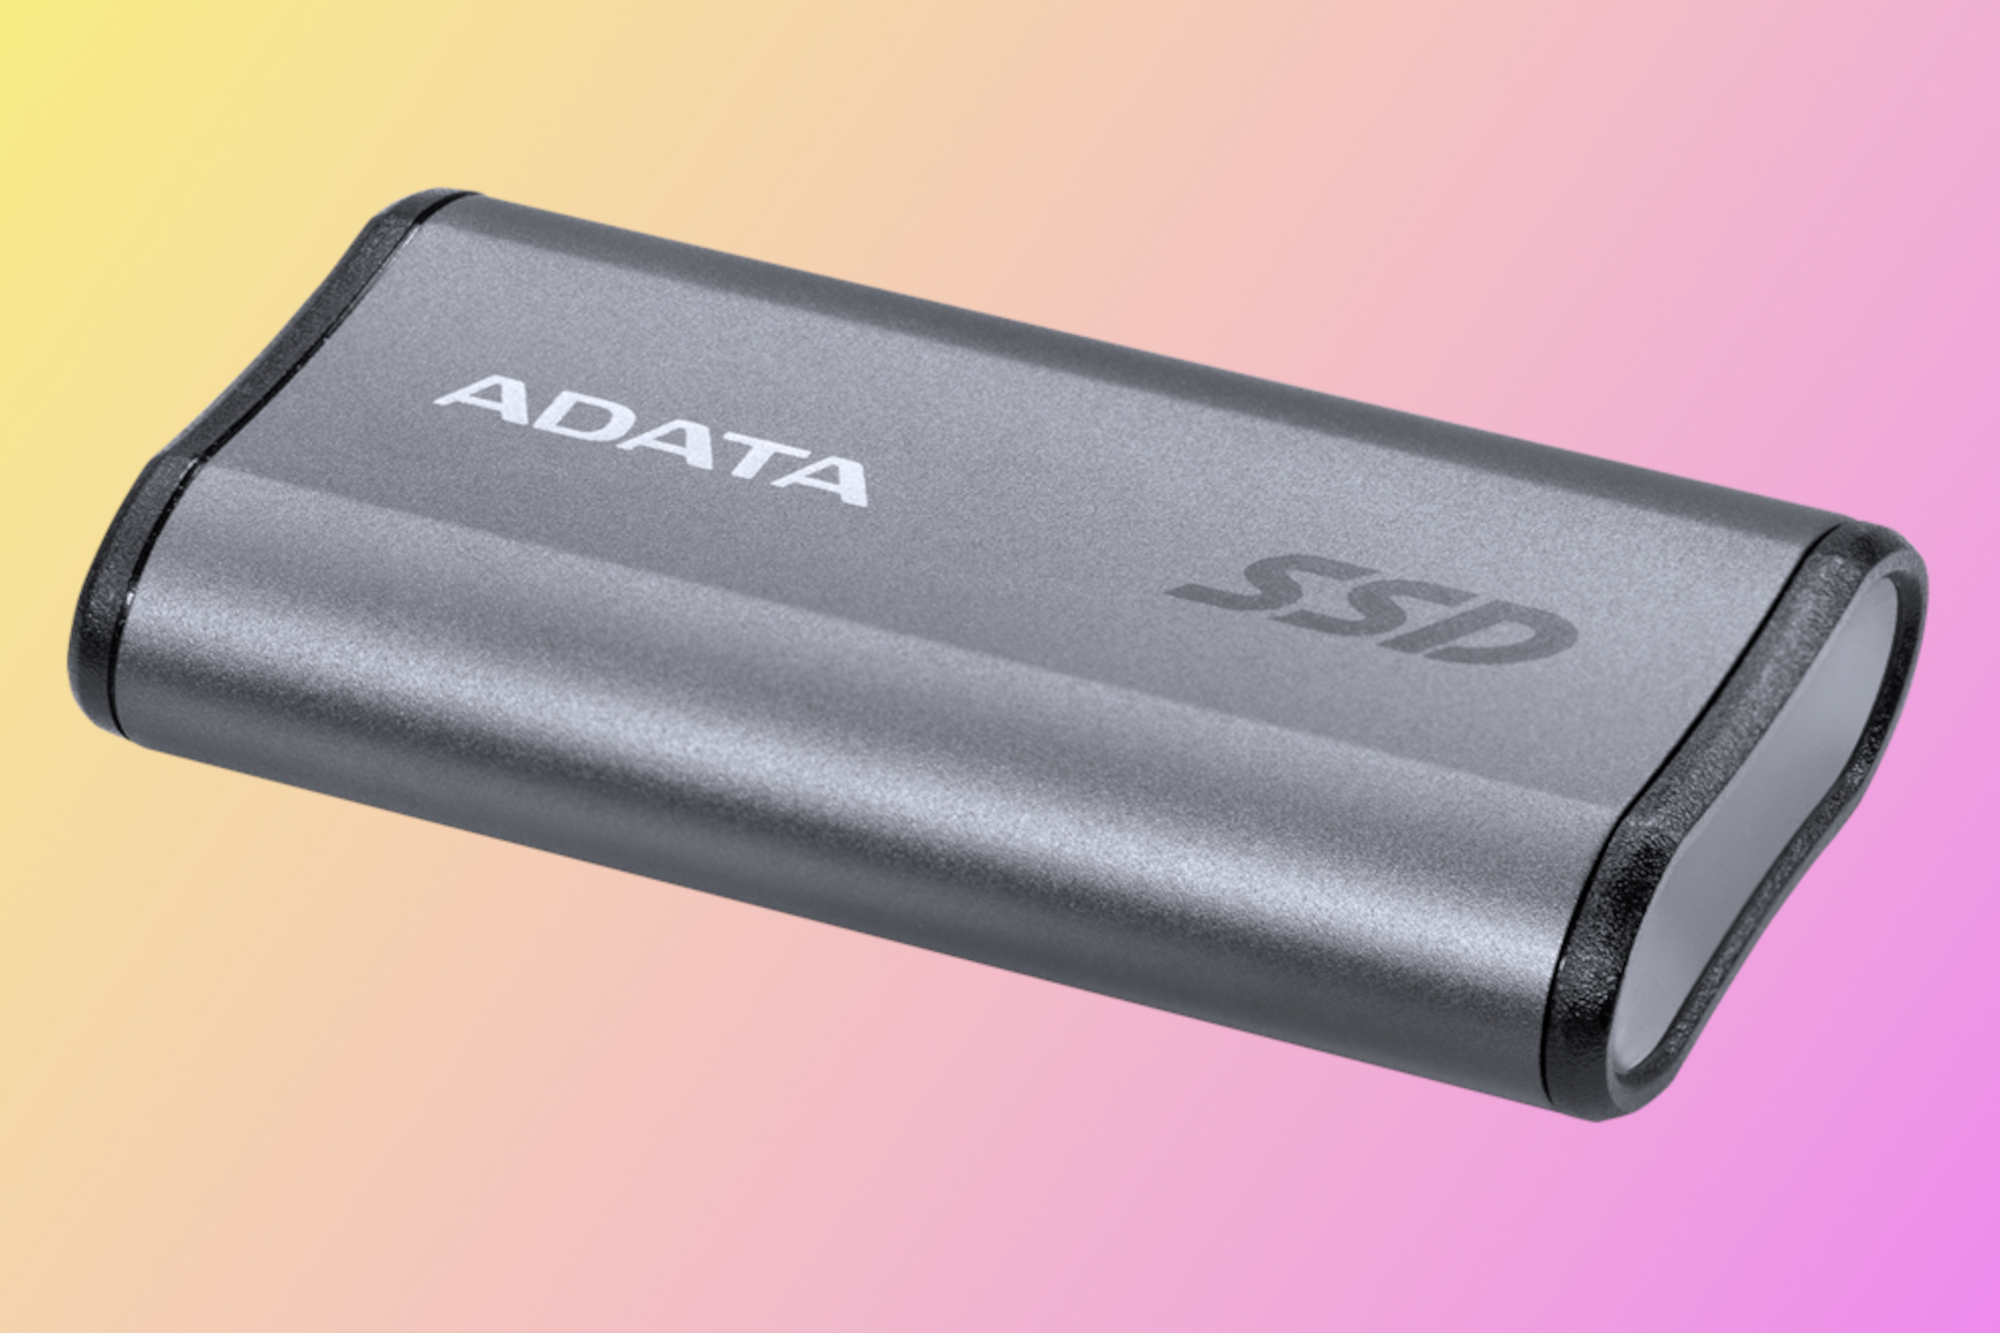 Adata Elite SE880 SSD - Most moveable SSD